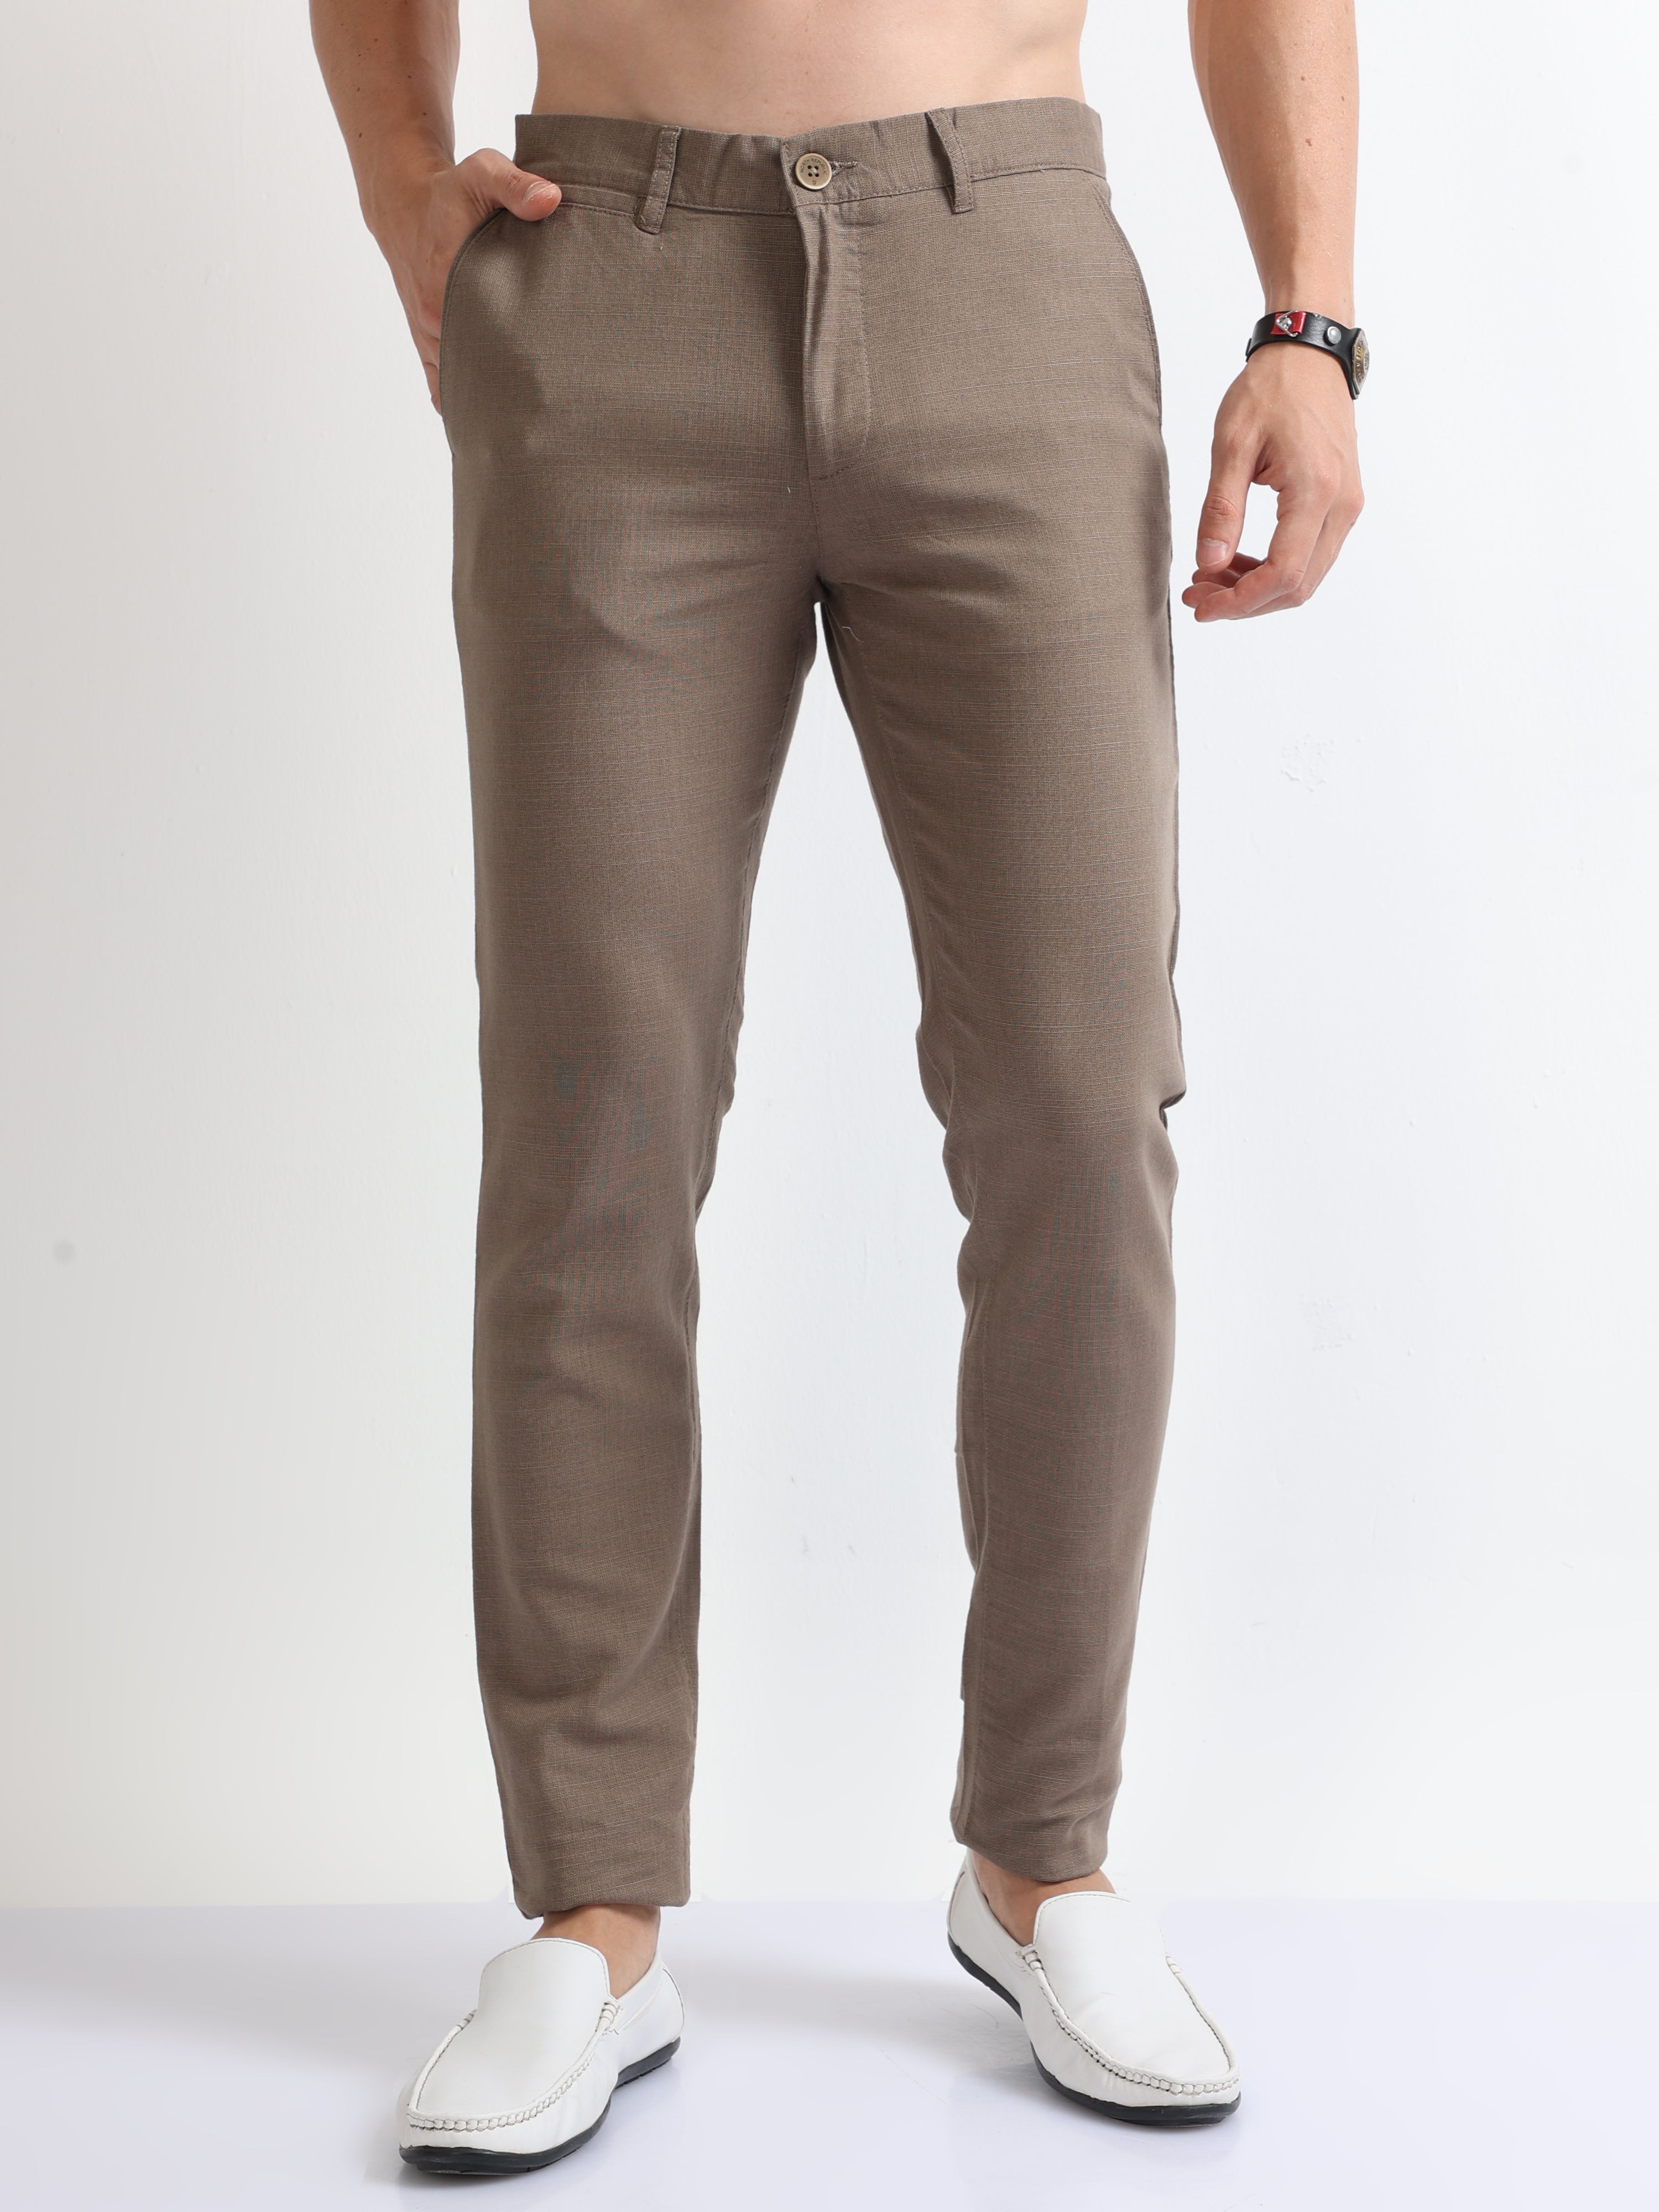 Hfyihgf Mens Cotton Linen Loose Fitting Casual Pants Lightweight Elastic  Waist Yoga Summer Beach Trousers Drawstring Pants with Pockets(Brown,M) -  Walmart.com